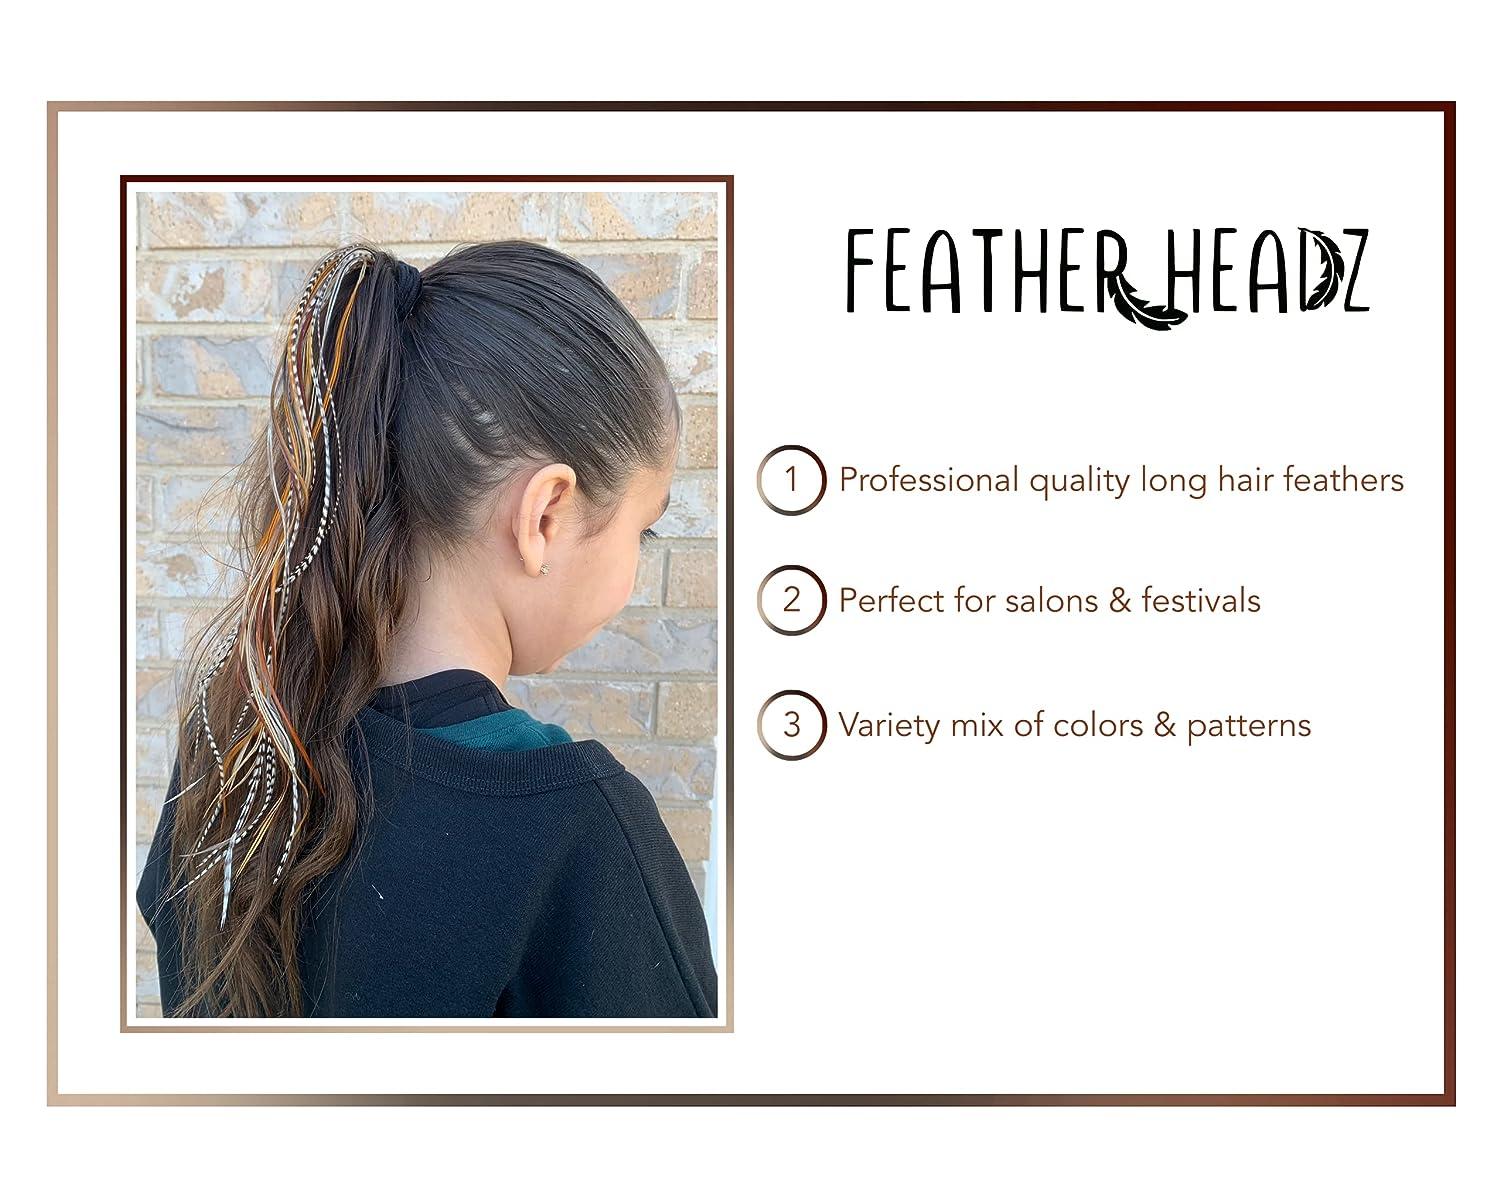 Hair Feathers